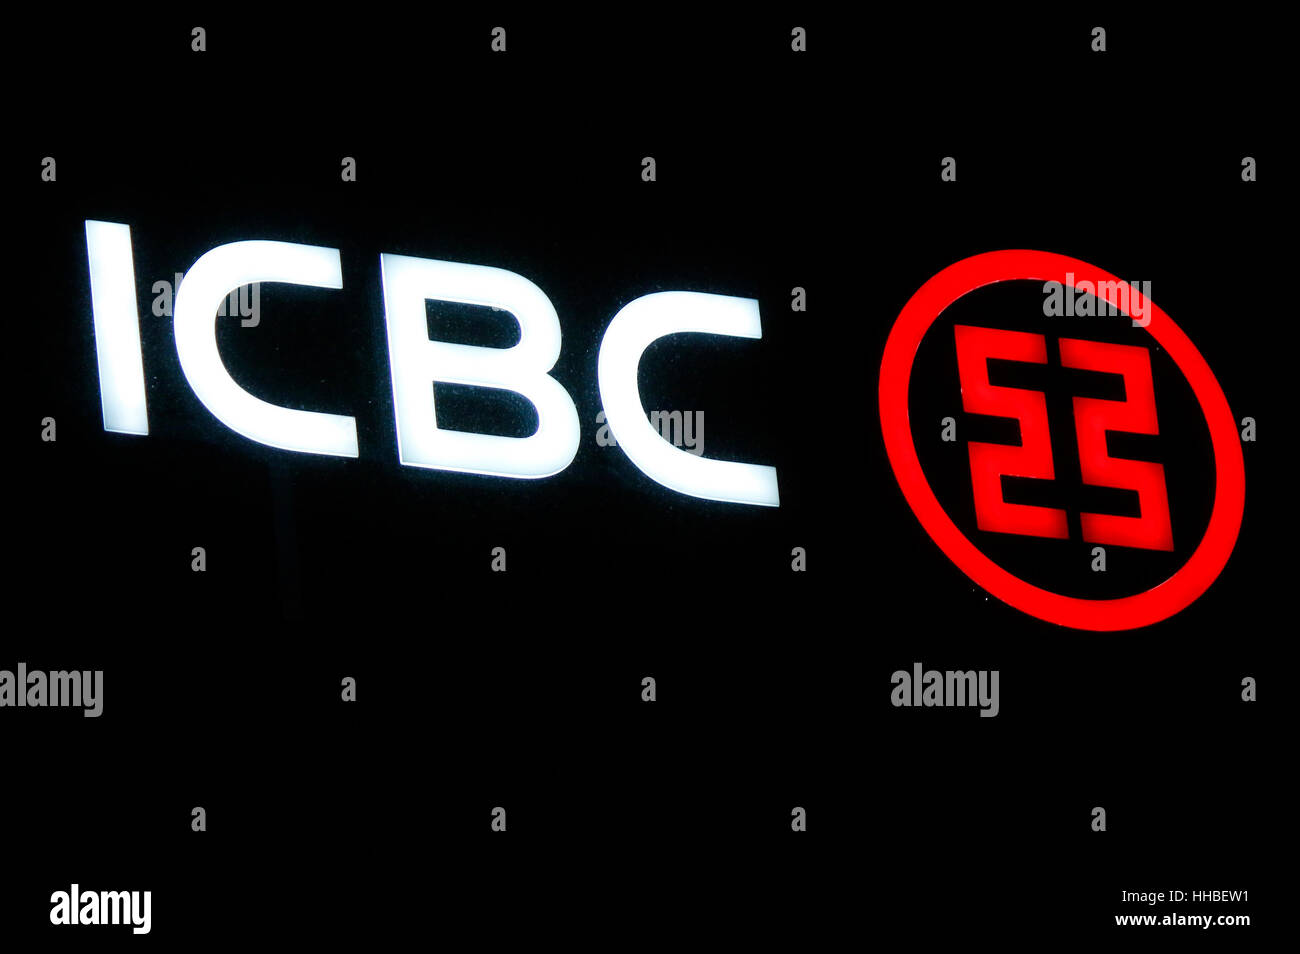 Das Logo der Marke "ICBC", Berlin. Stockfoto